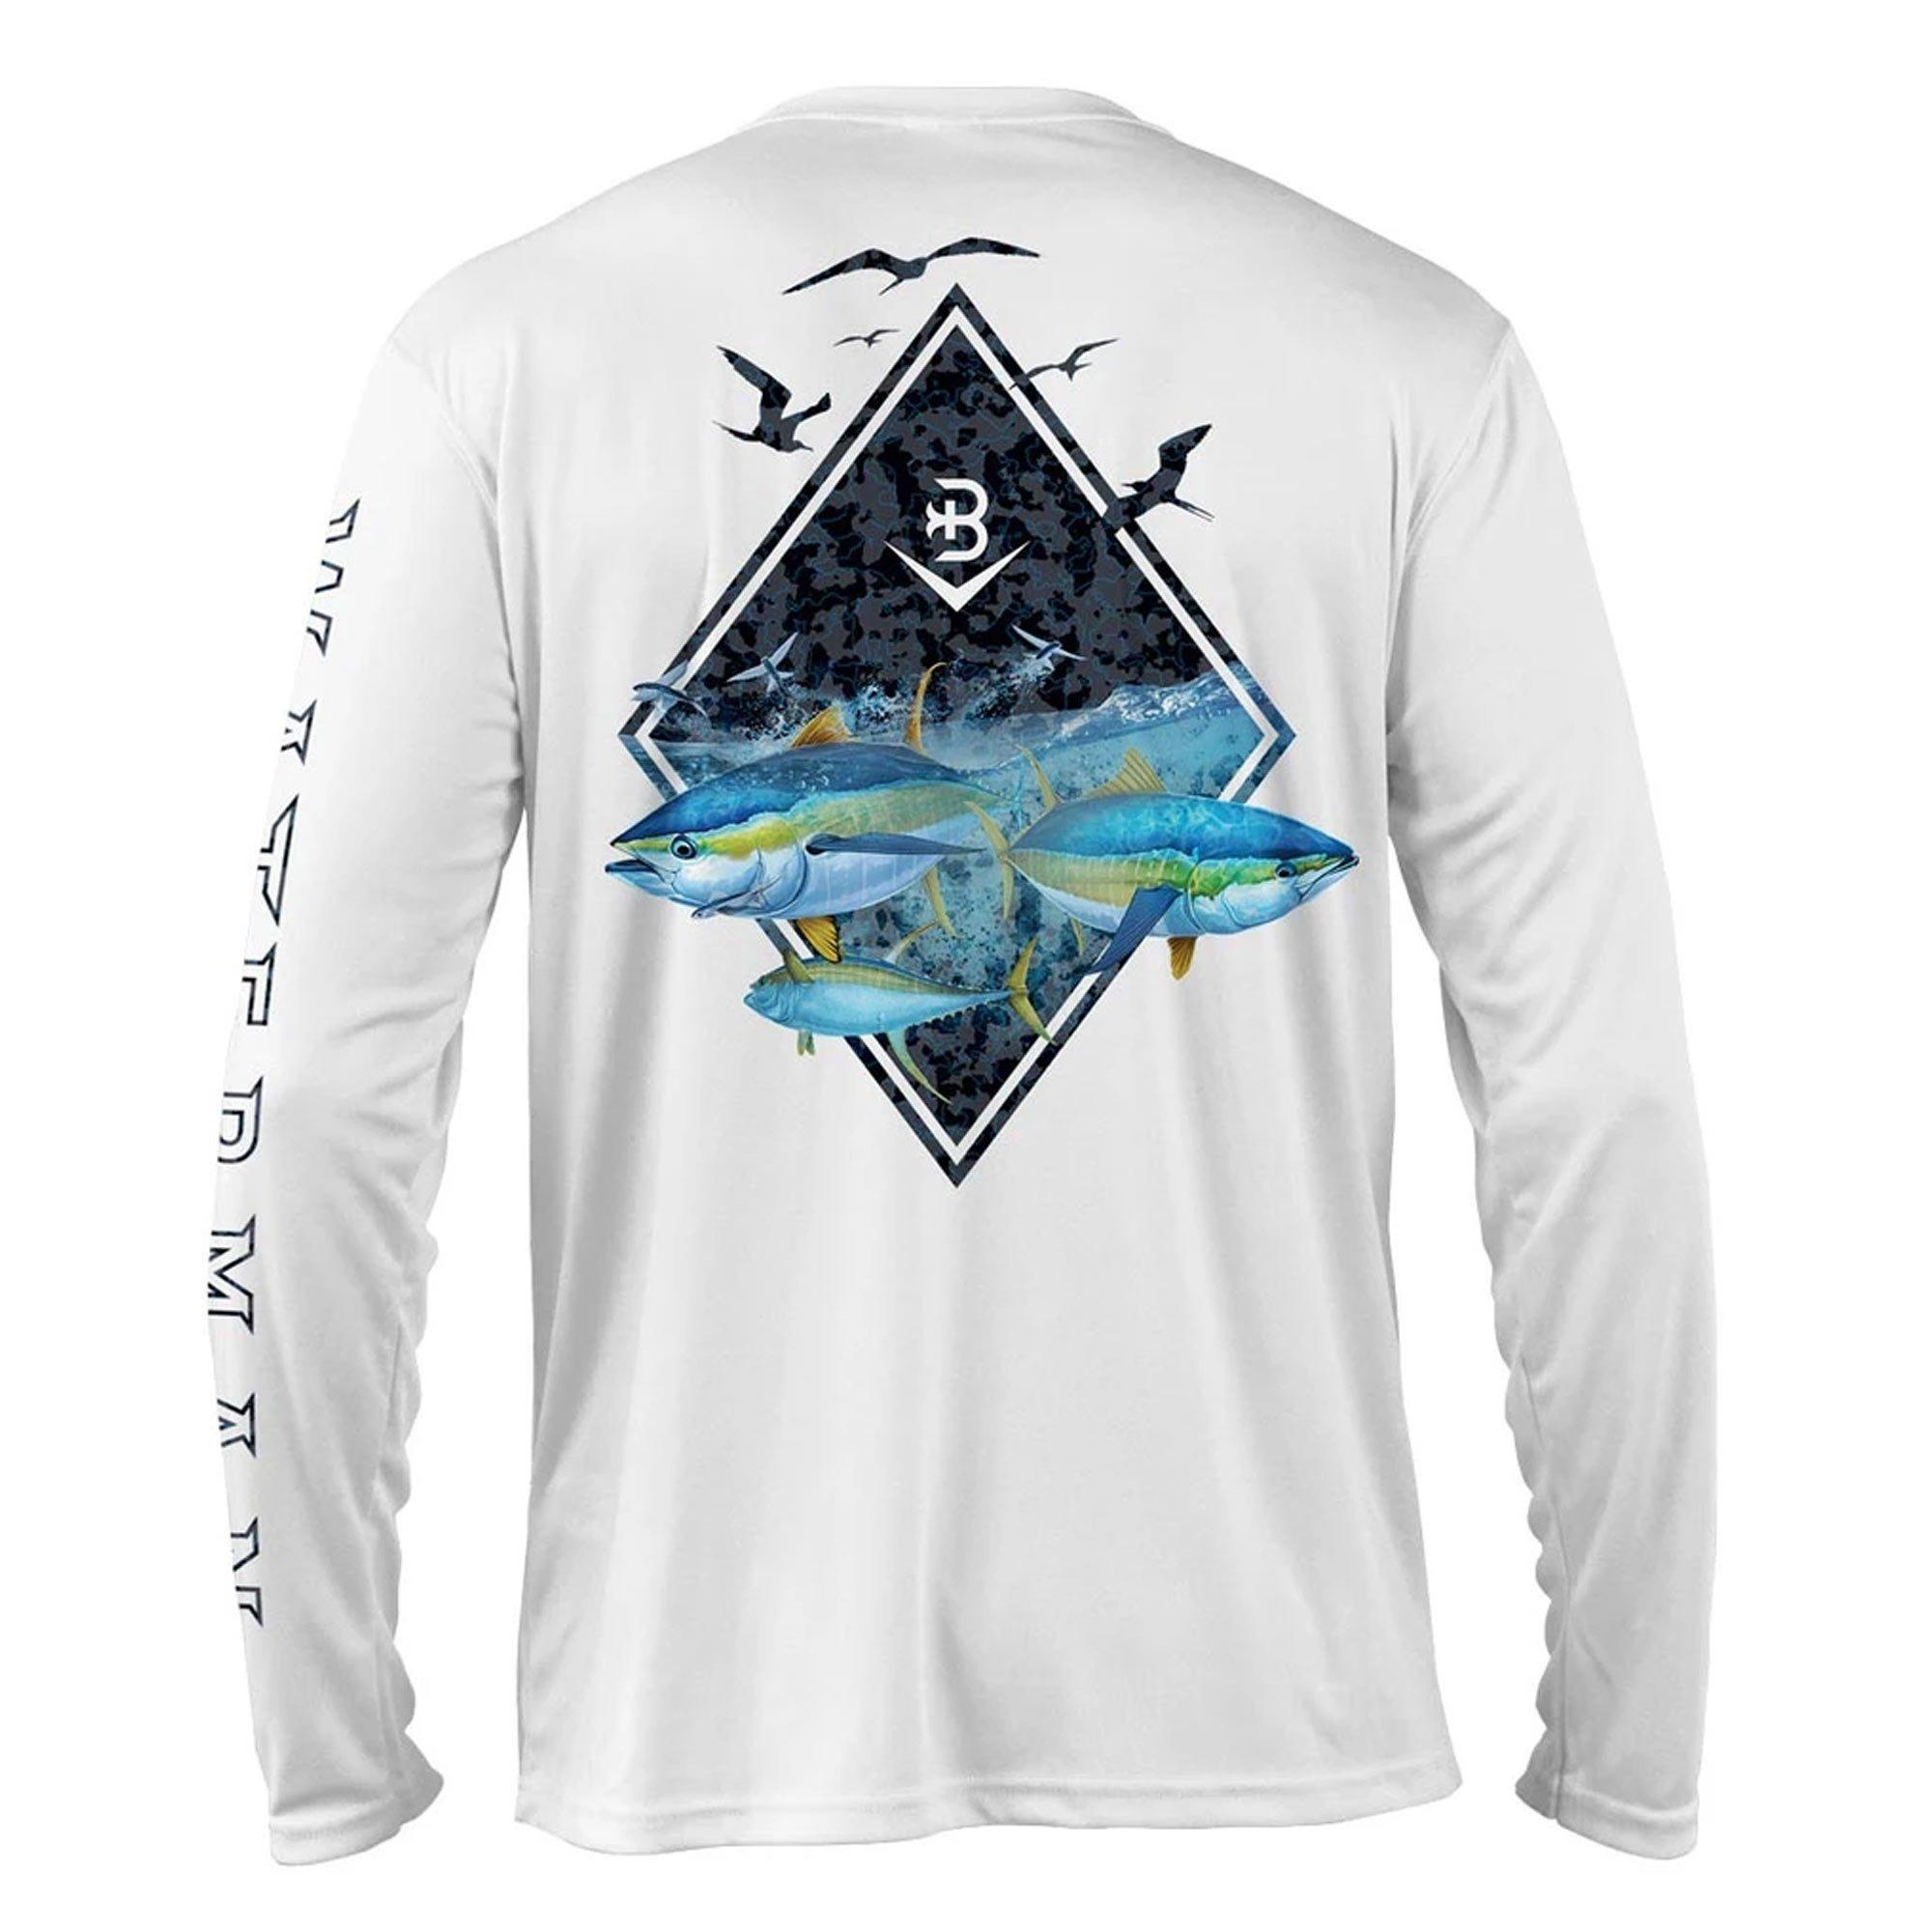 SeaGuard Marlin Womens Long Sleeve Fishing Shirt S